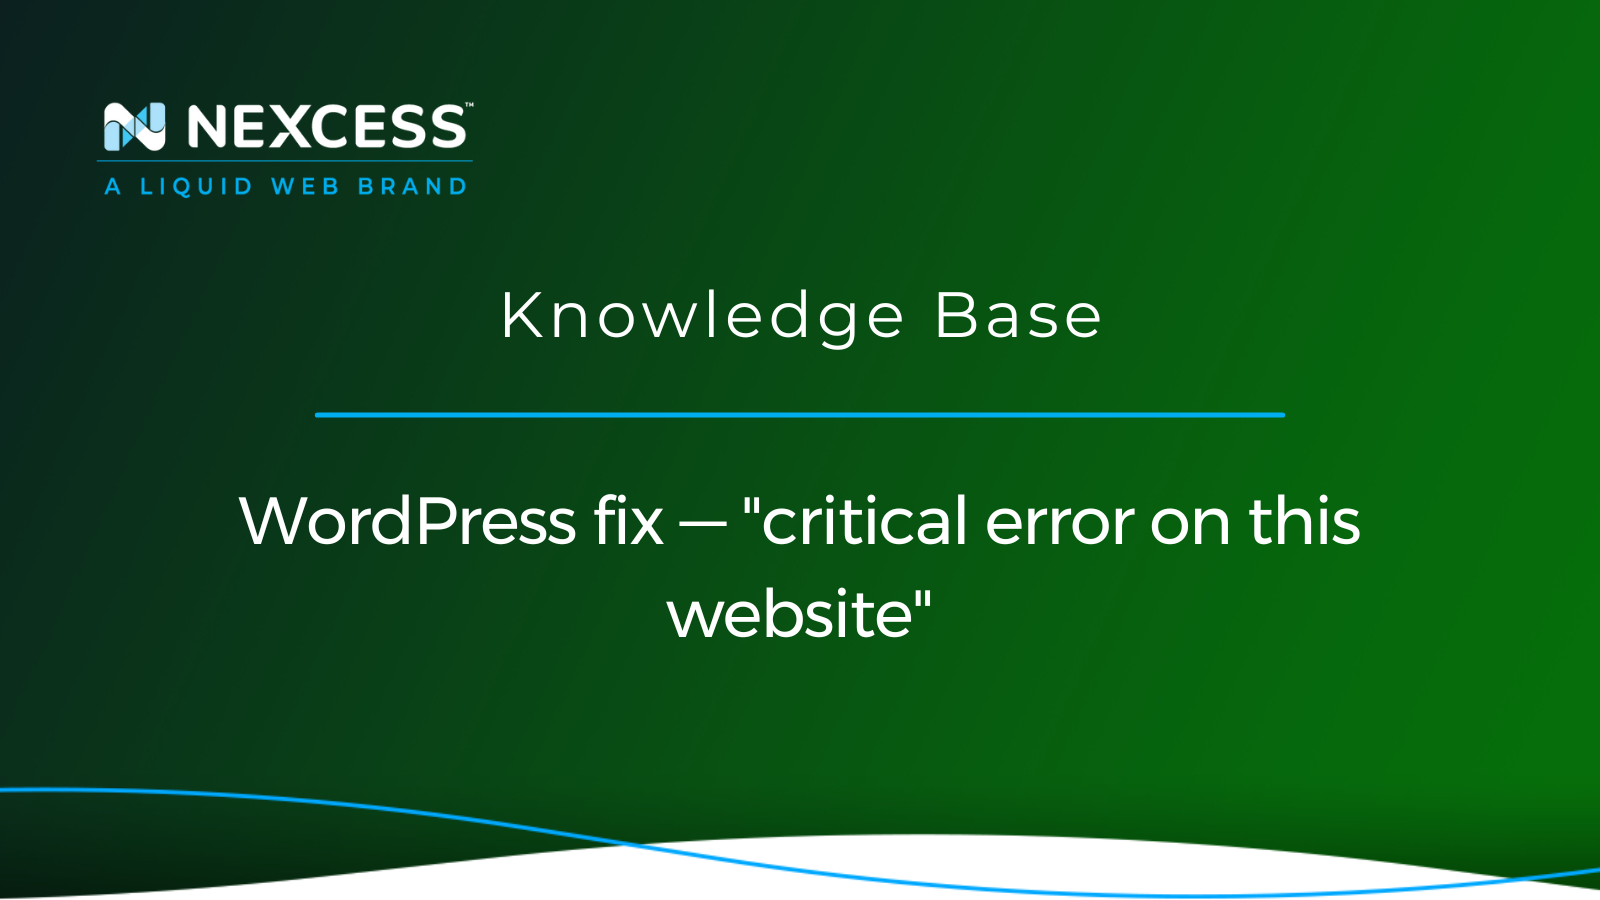 WordPress fix — "critical error on this website"